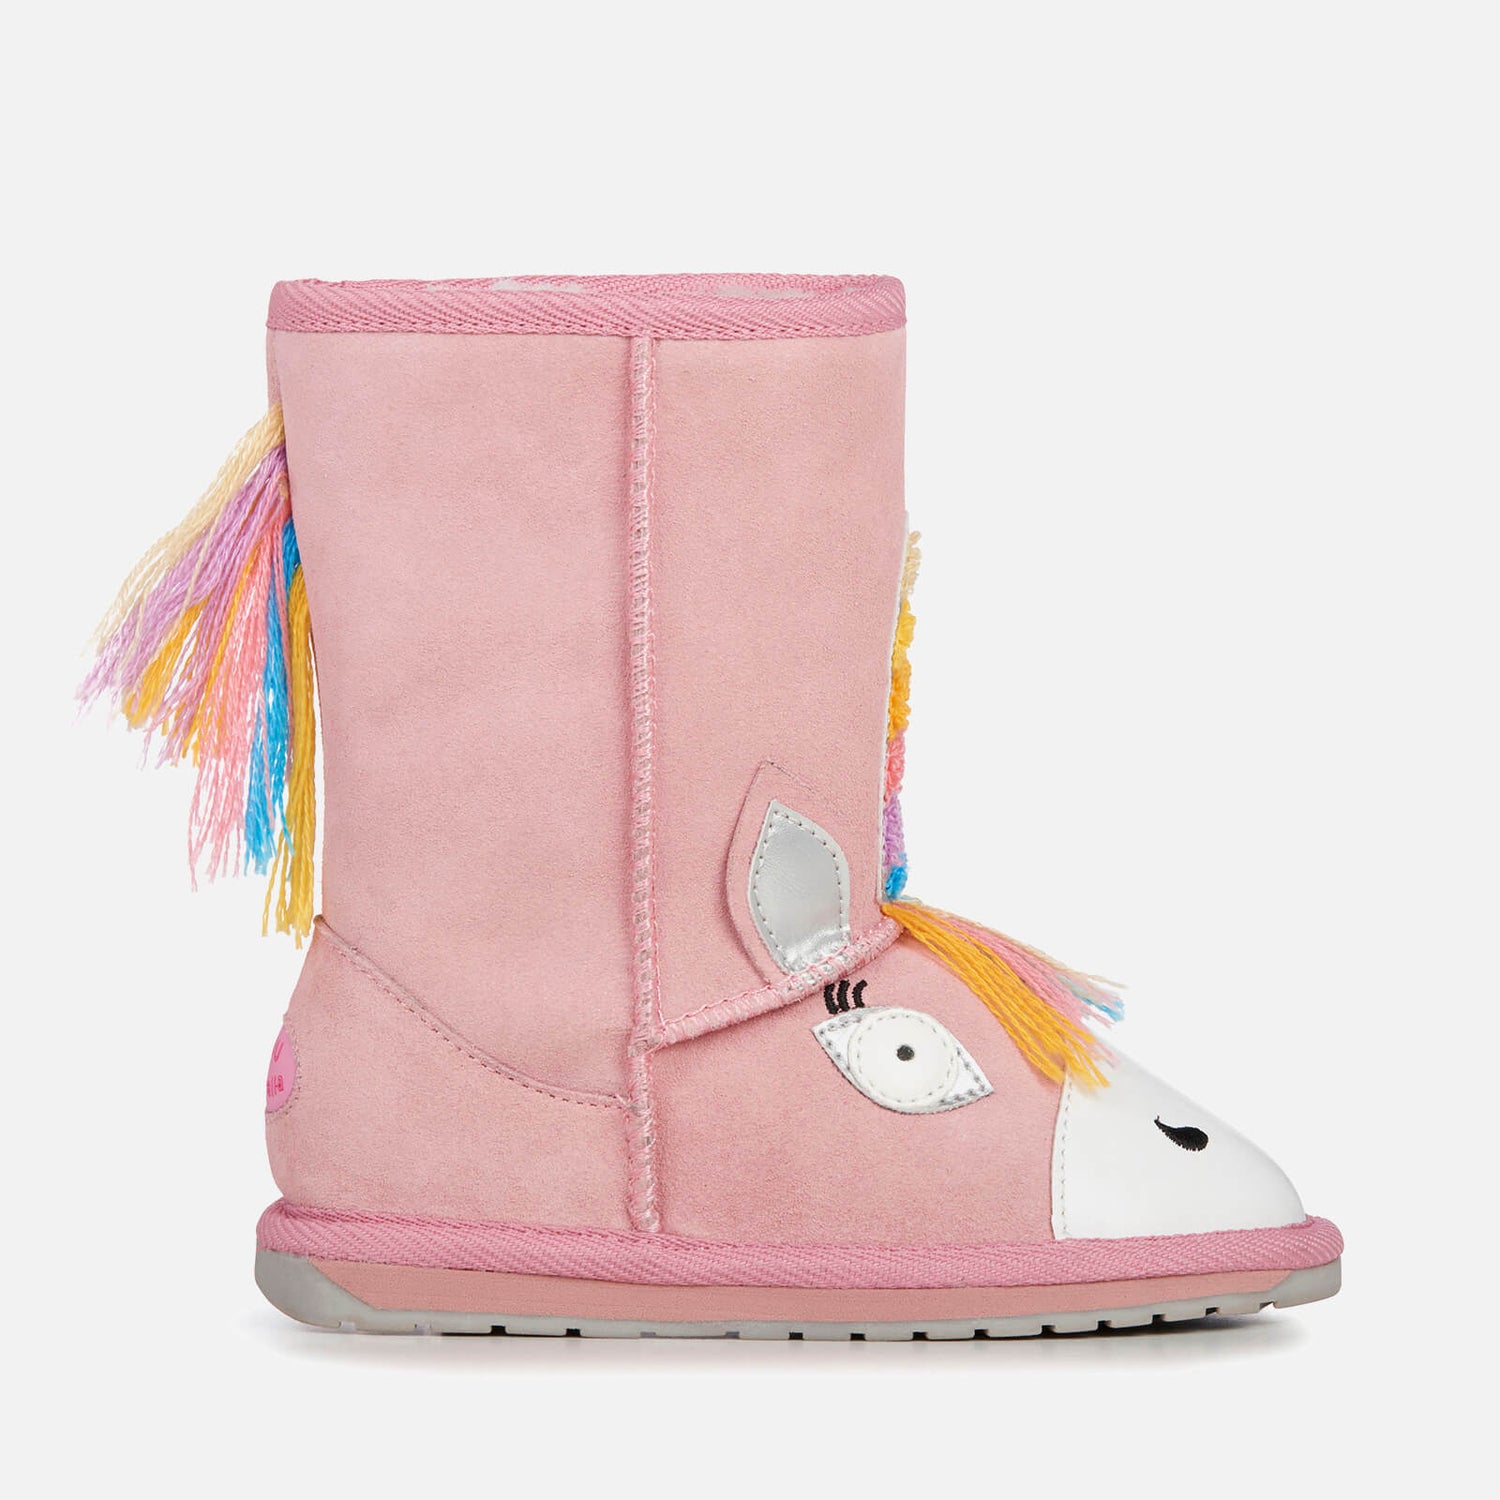 EMU Australia Toddlers' Magical Unicorn Sheepskin Boots - Pale Pink - UK 7 Toddler